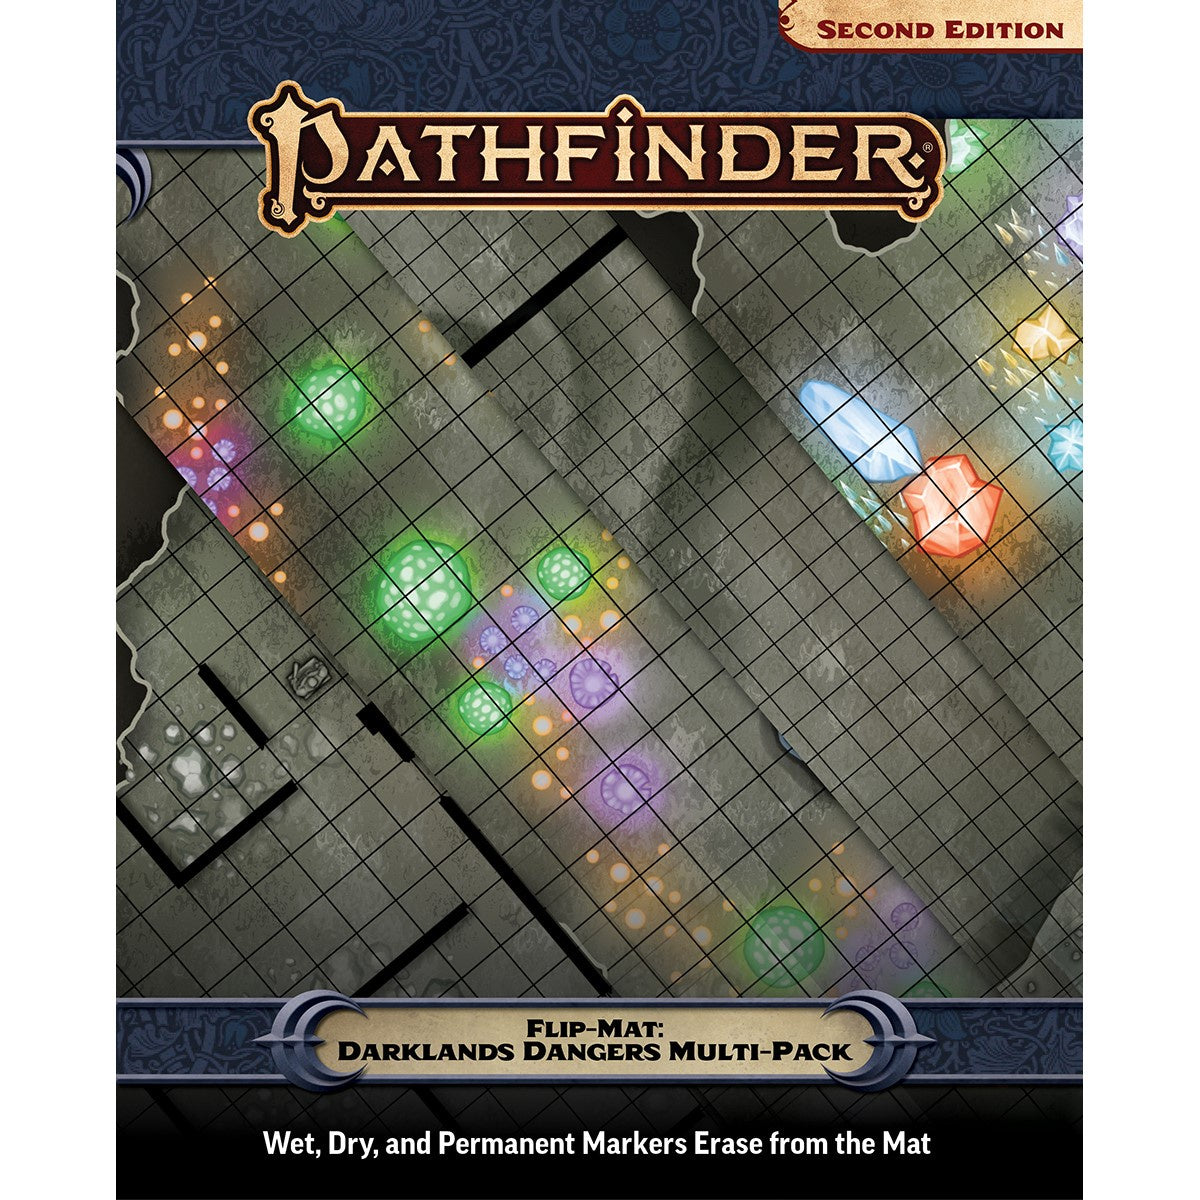 Pathfinder Second Edition Flip-Mat: Darklands Dangers Multi-Pack